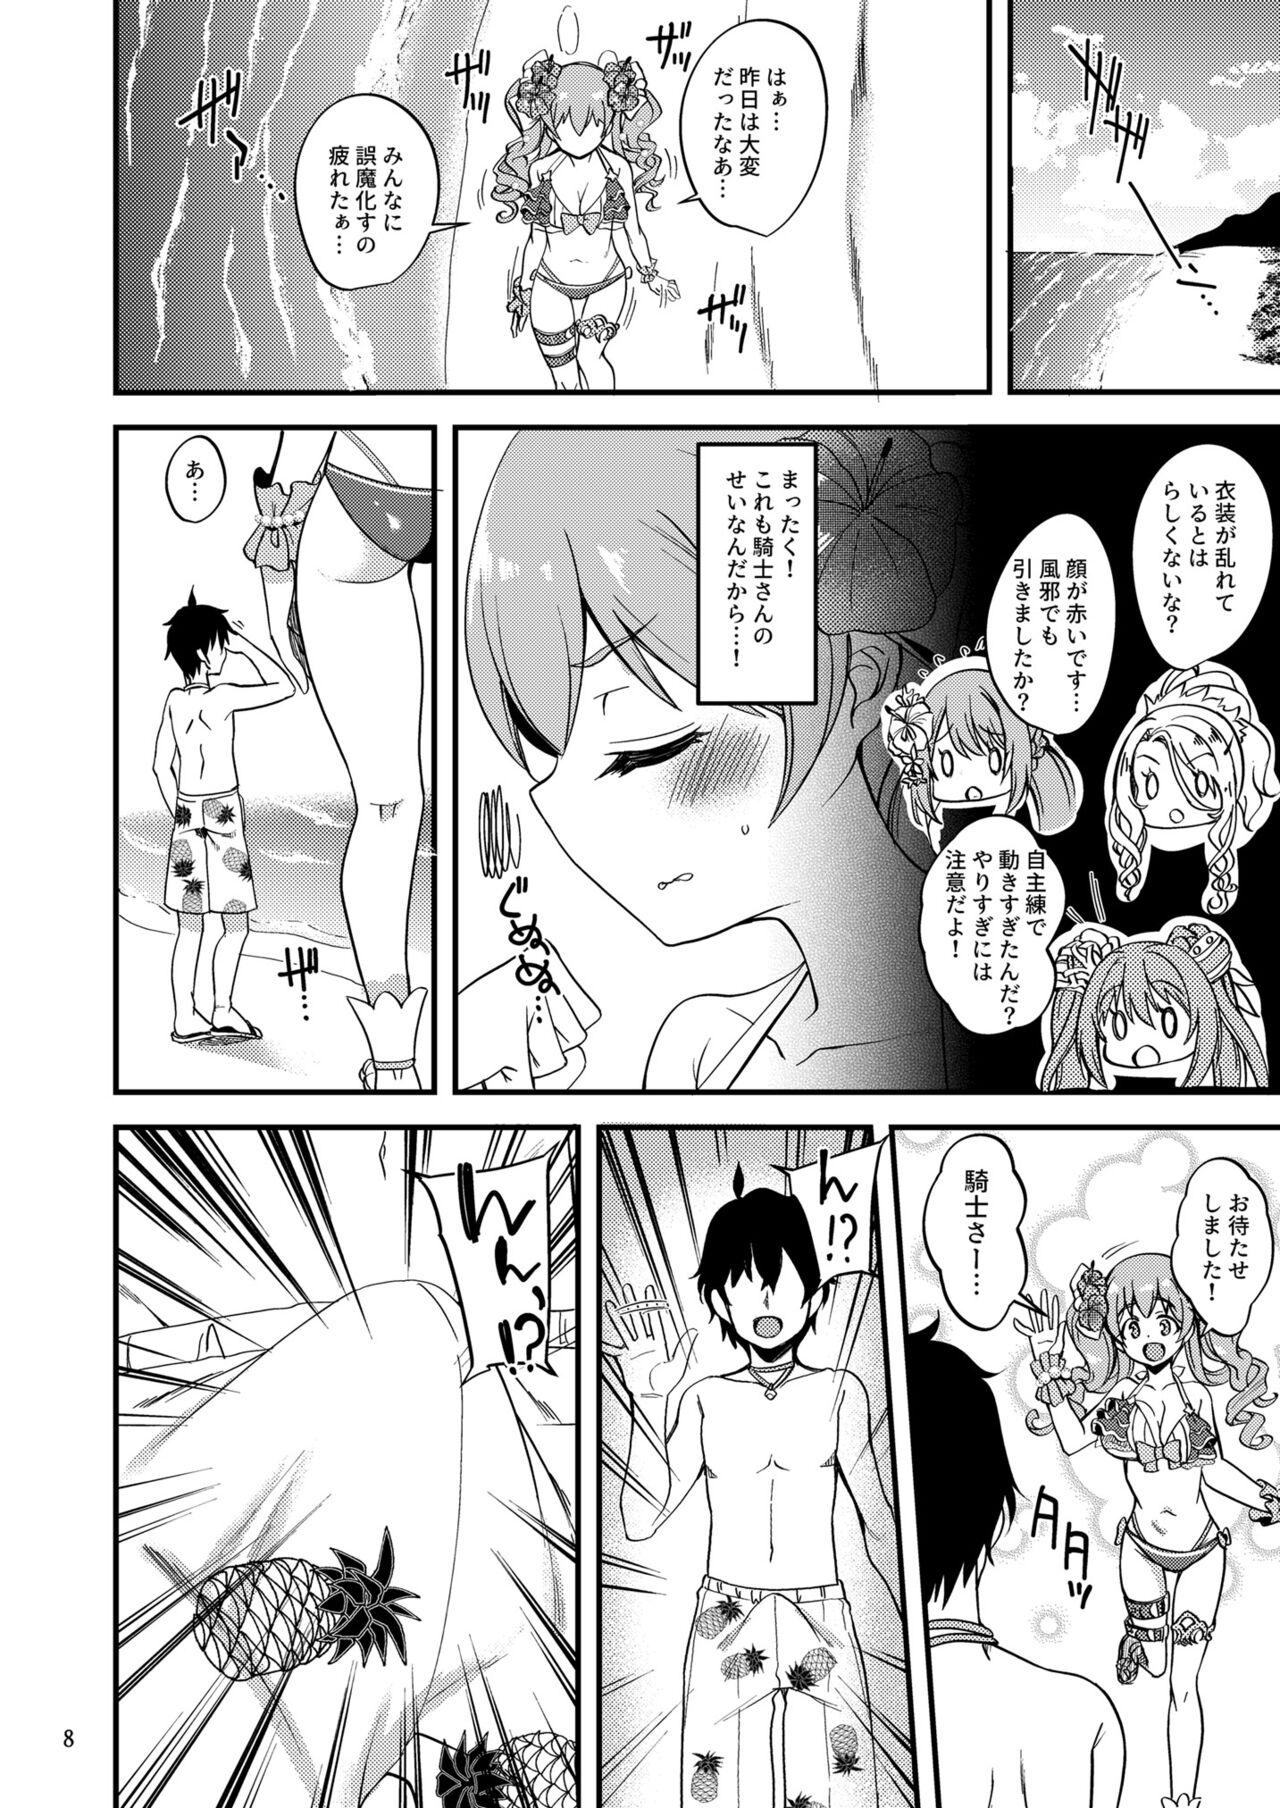 Butt Sex Tsumugi Make Heroine Move!! 07 - Princess connect Bdsm - Page 7